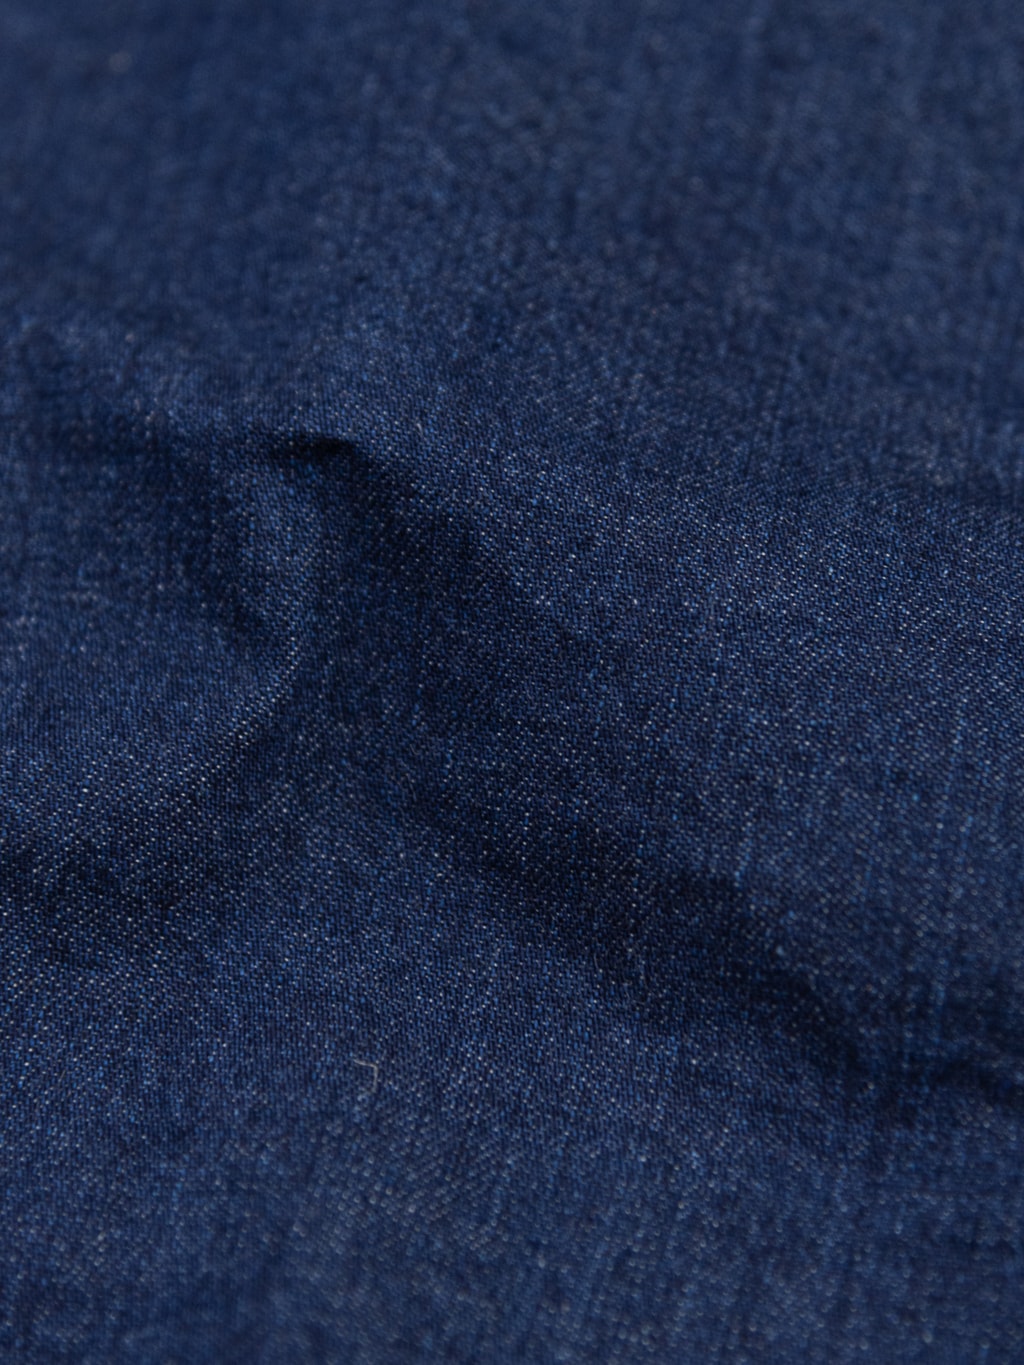 tcb cathartt Chore Coat 10oz denim fabric texture